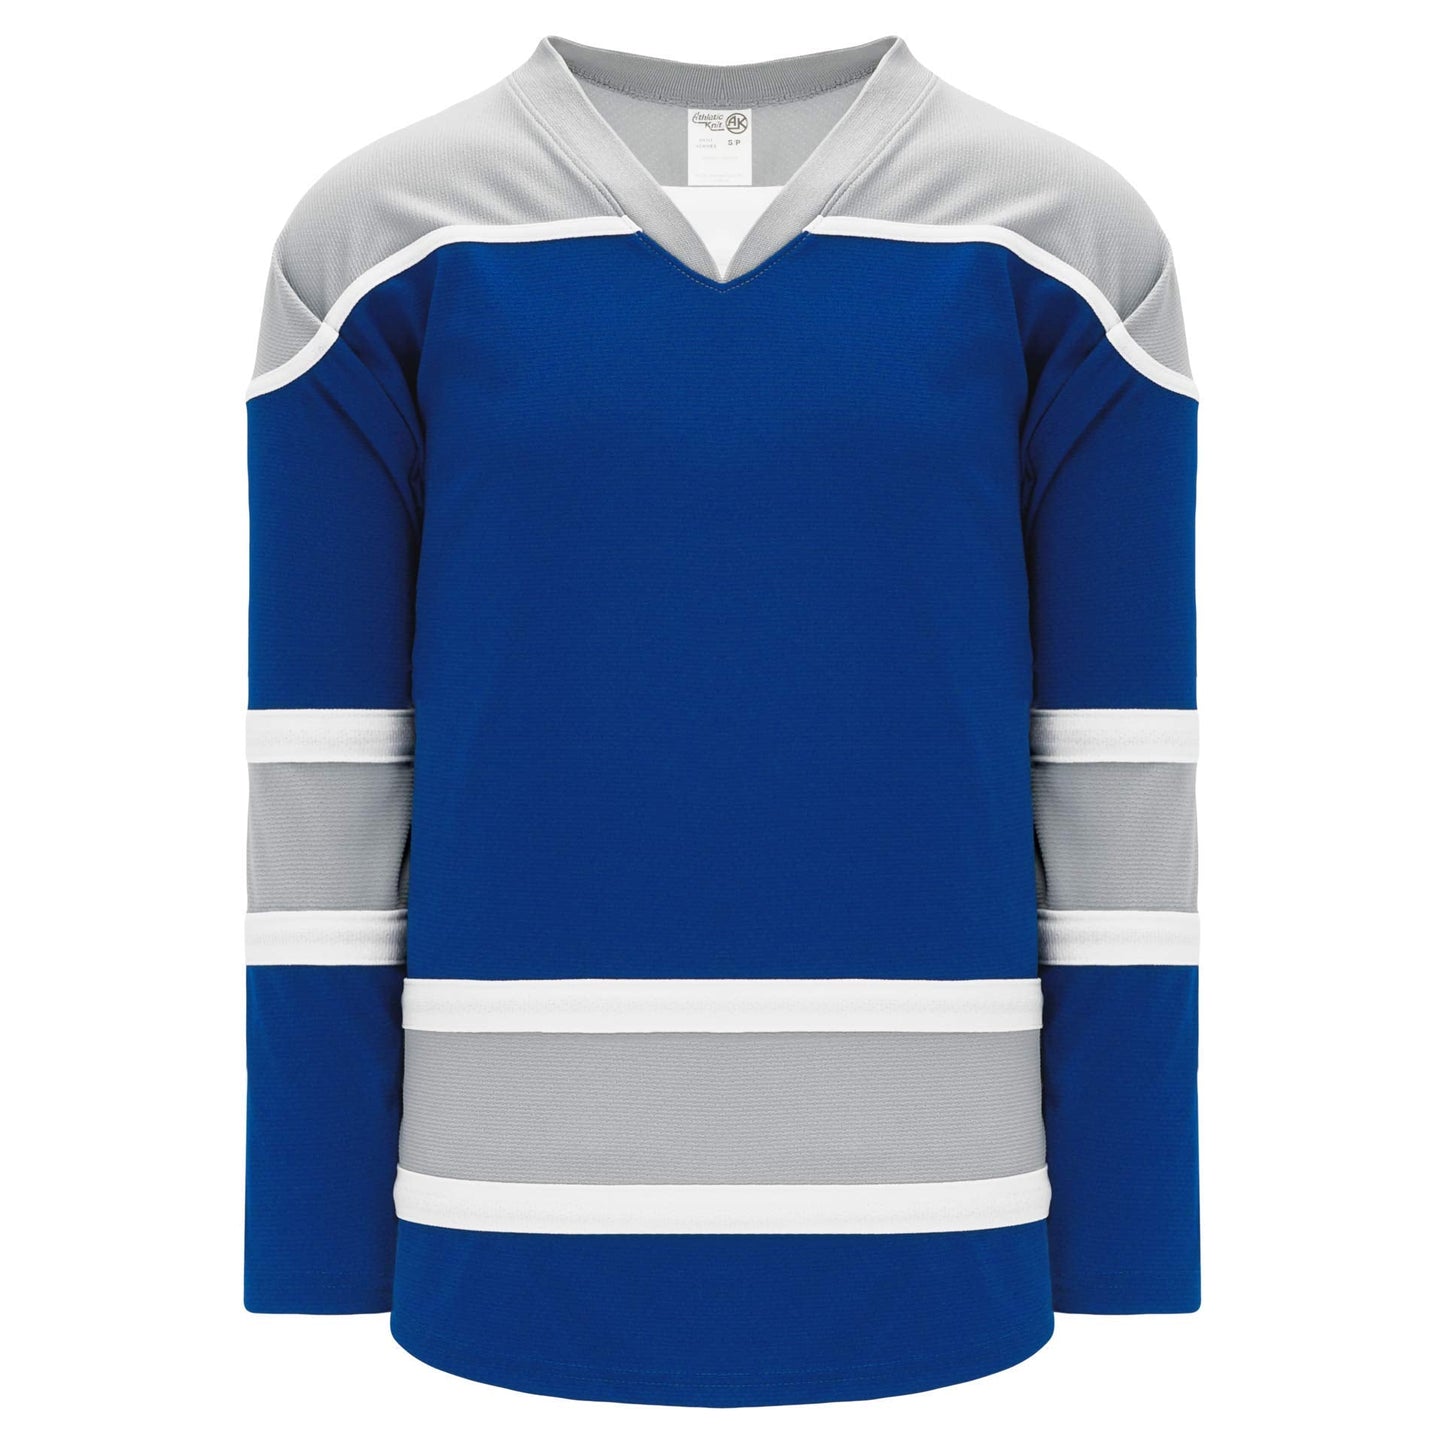 Custom Royal, Grey, White  hockey jerseys no minimum